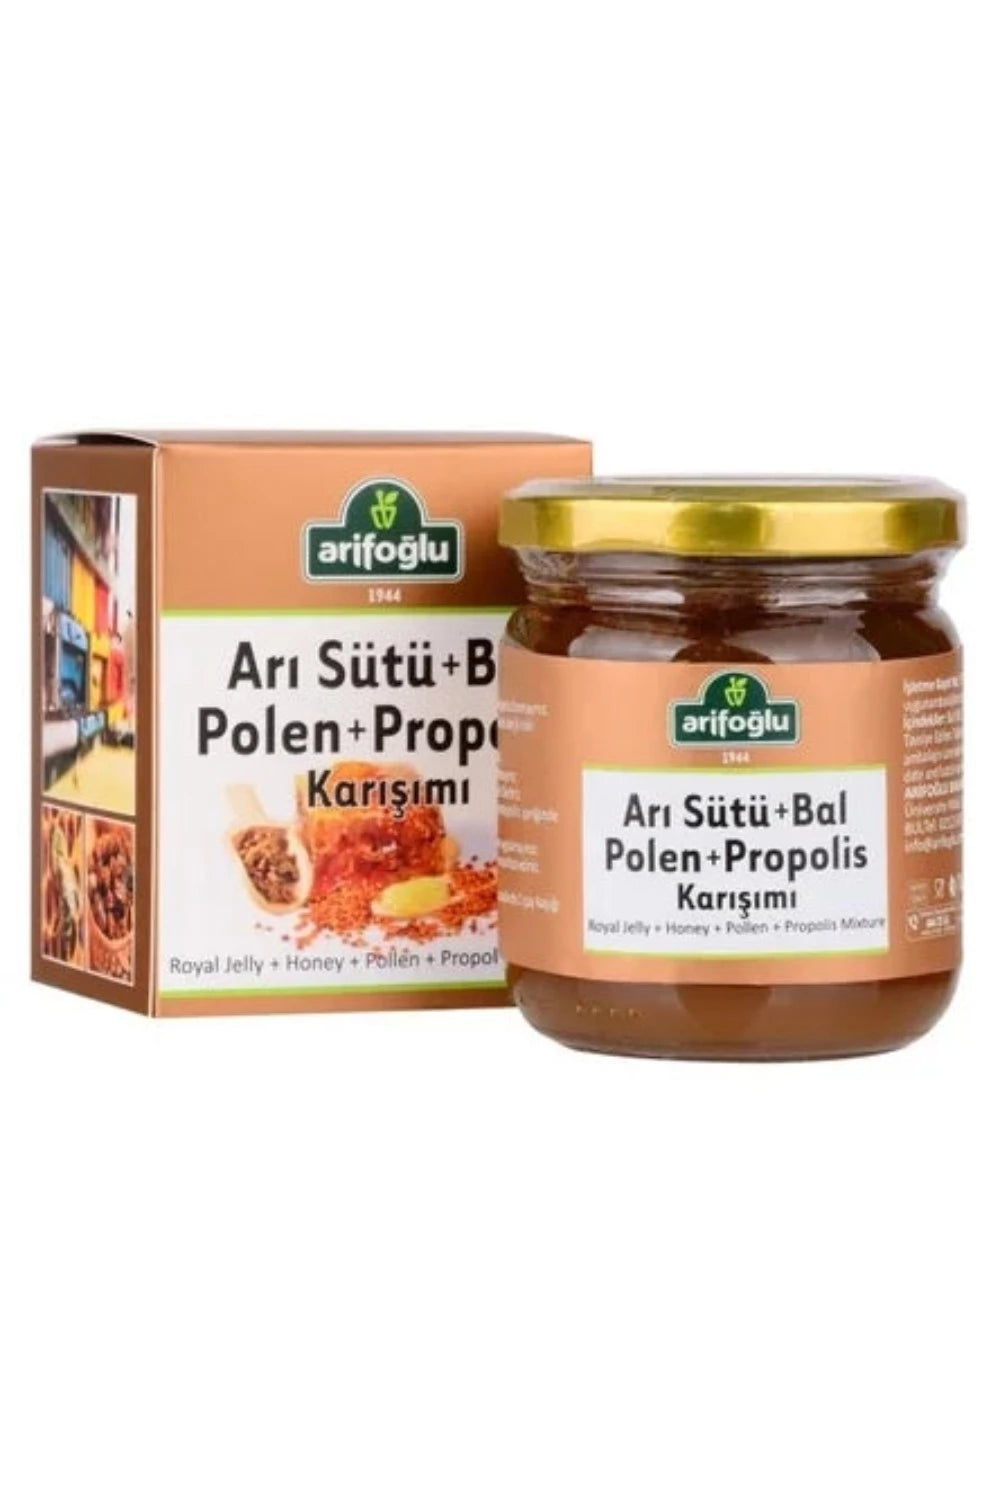 Royal jelly + honey + pollen + propolis organic paste.